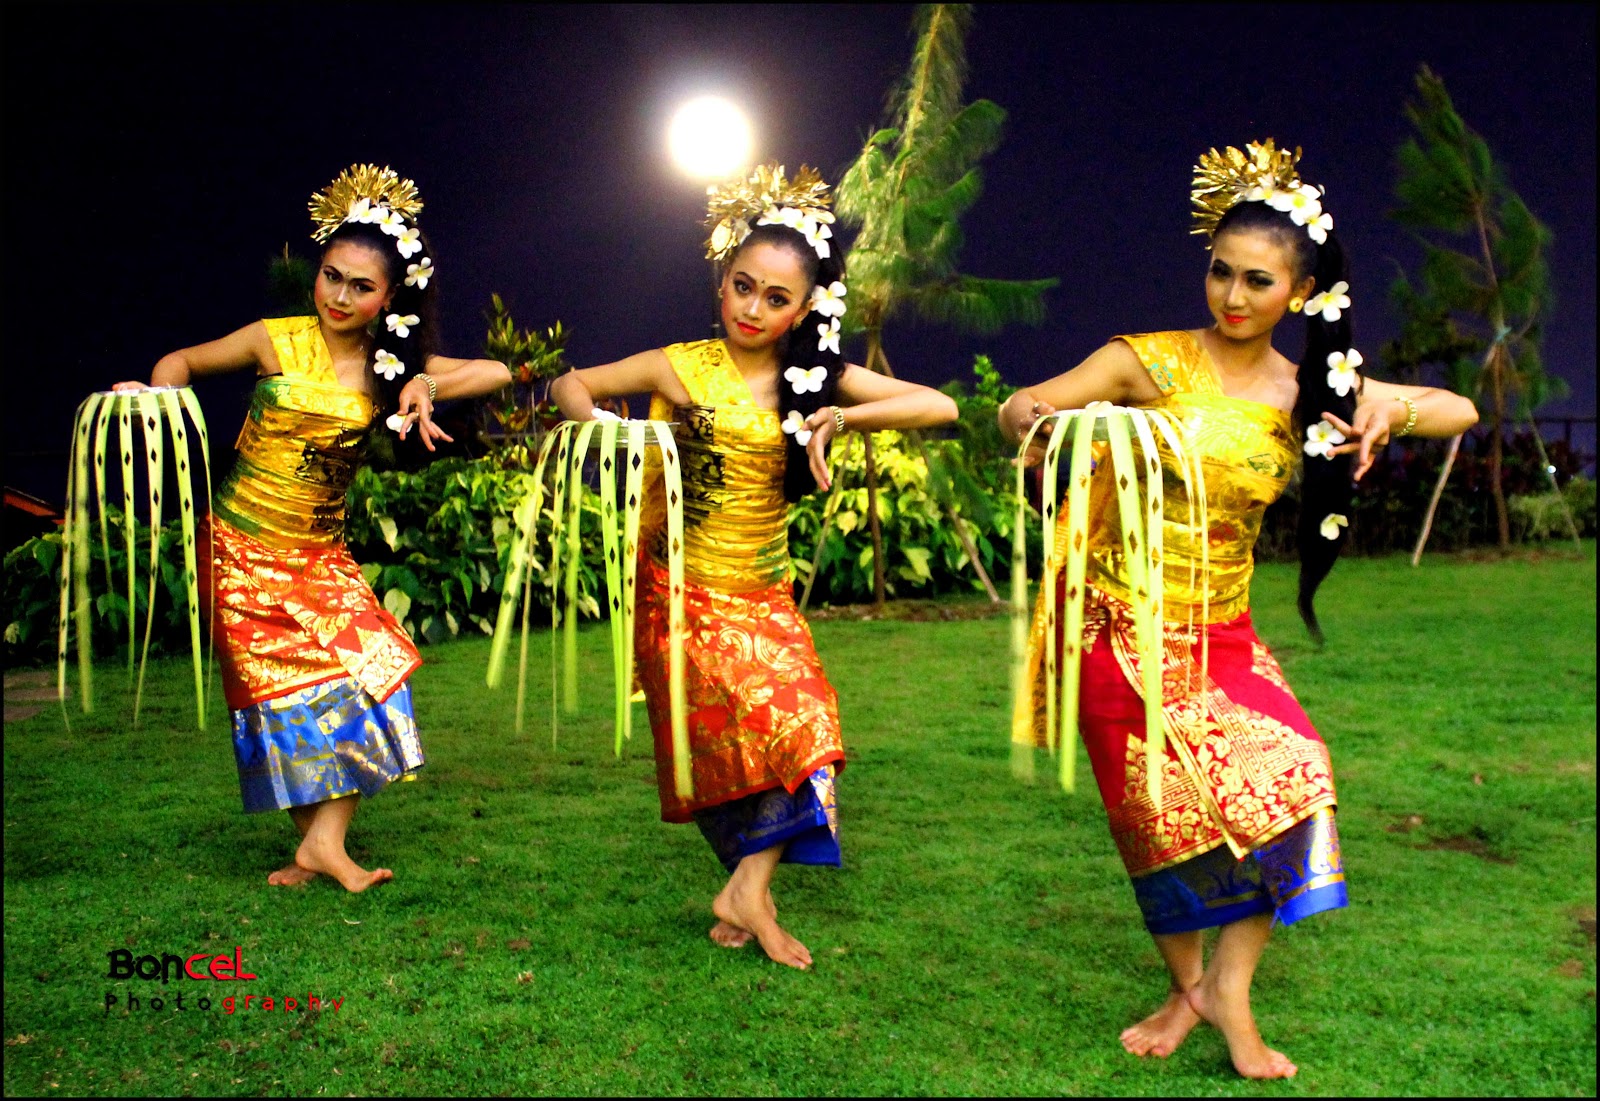 Tari Pendet Tarian Tradisional Khas Bali